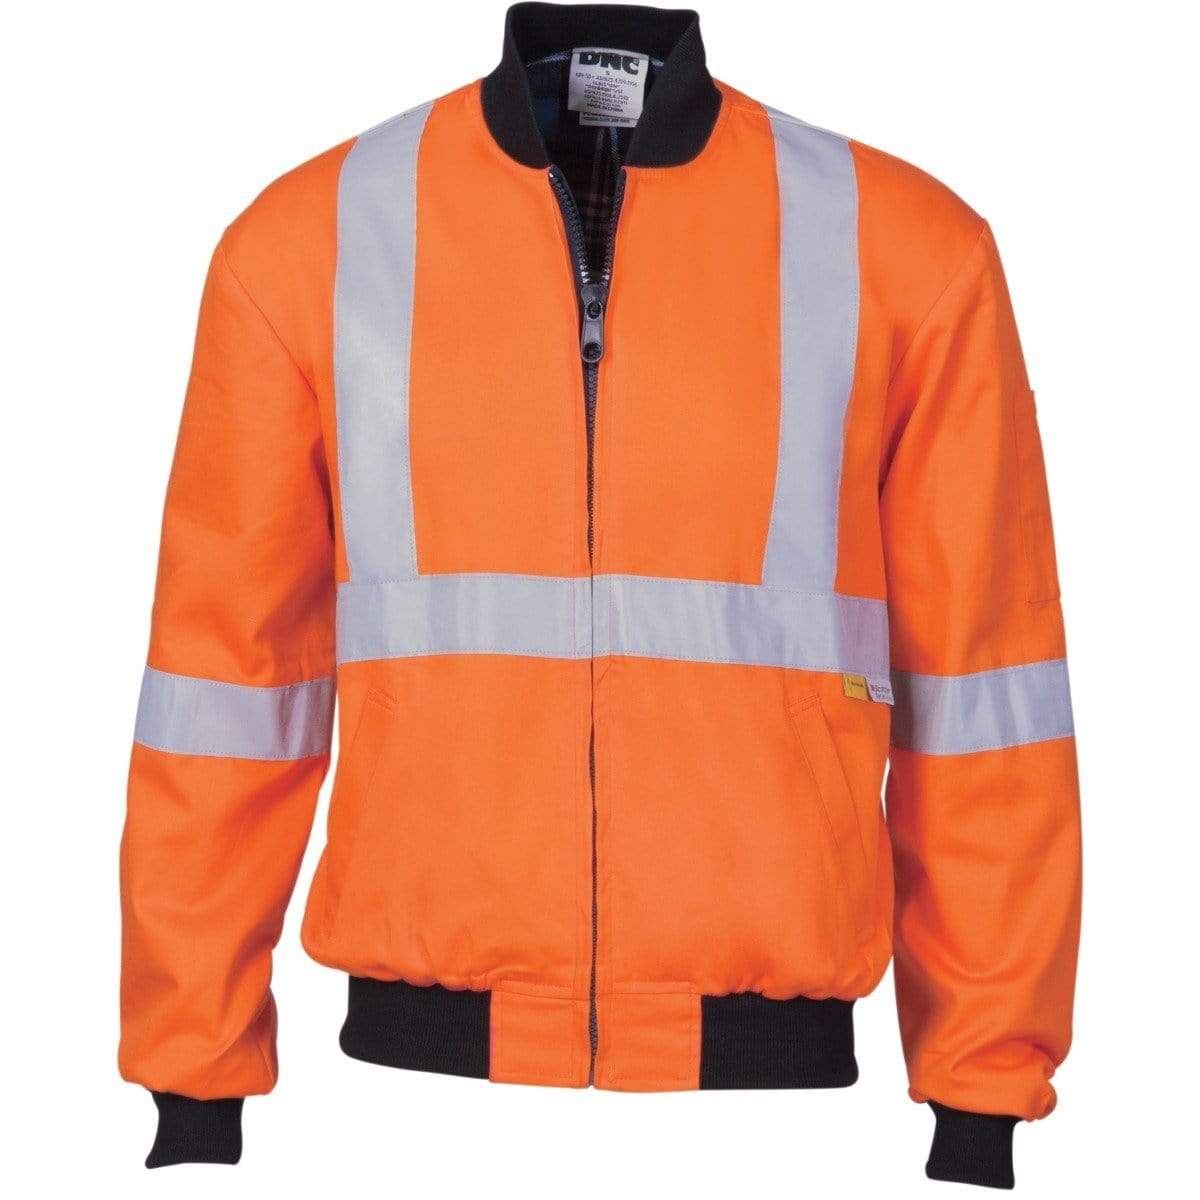 Dnc Workwear Hi-vis Cotton Bomber Jacket With ‘x’ Back & Additional 3m Reflective Tape Below - 3759 Work Wear DNC Workwear Orange XS 